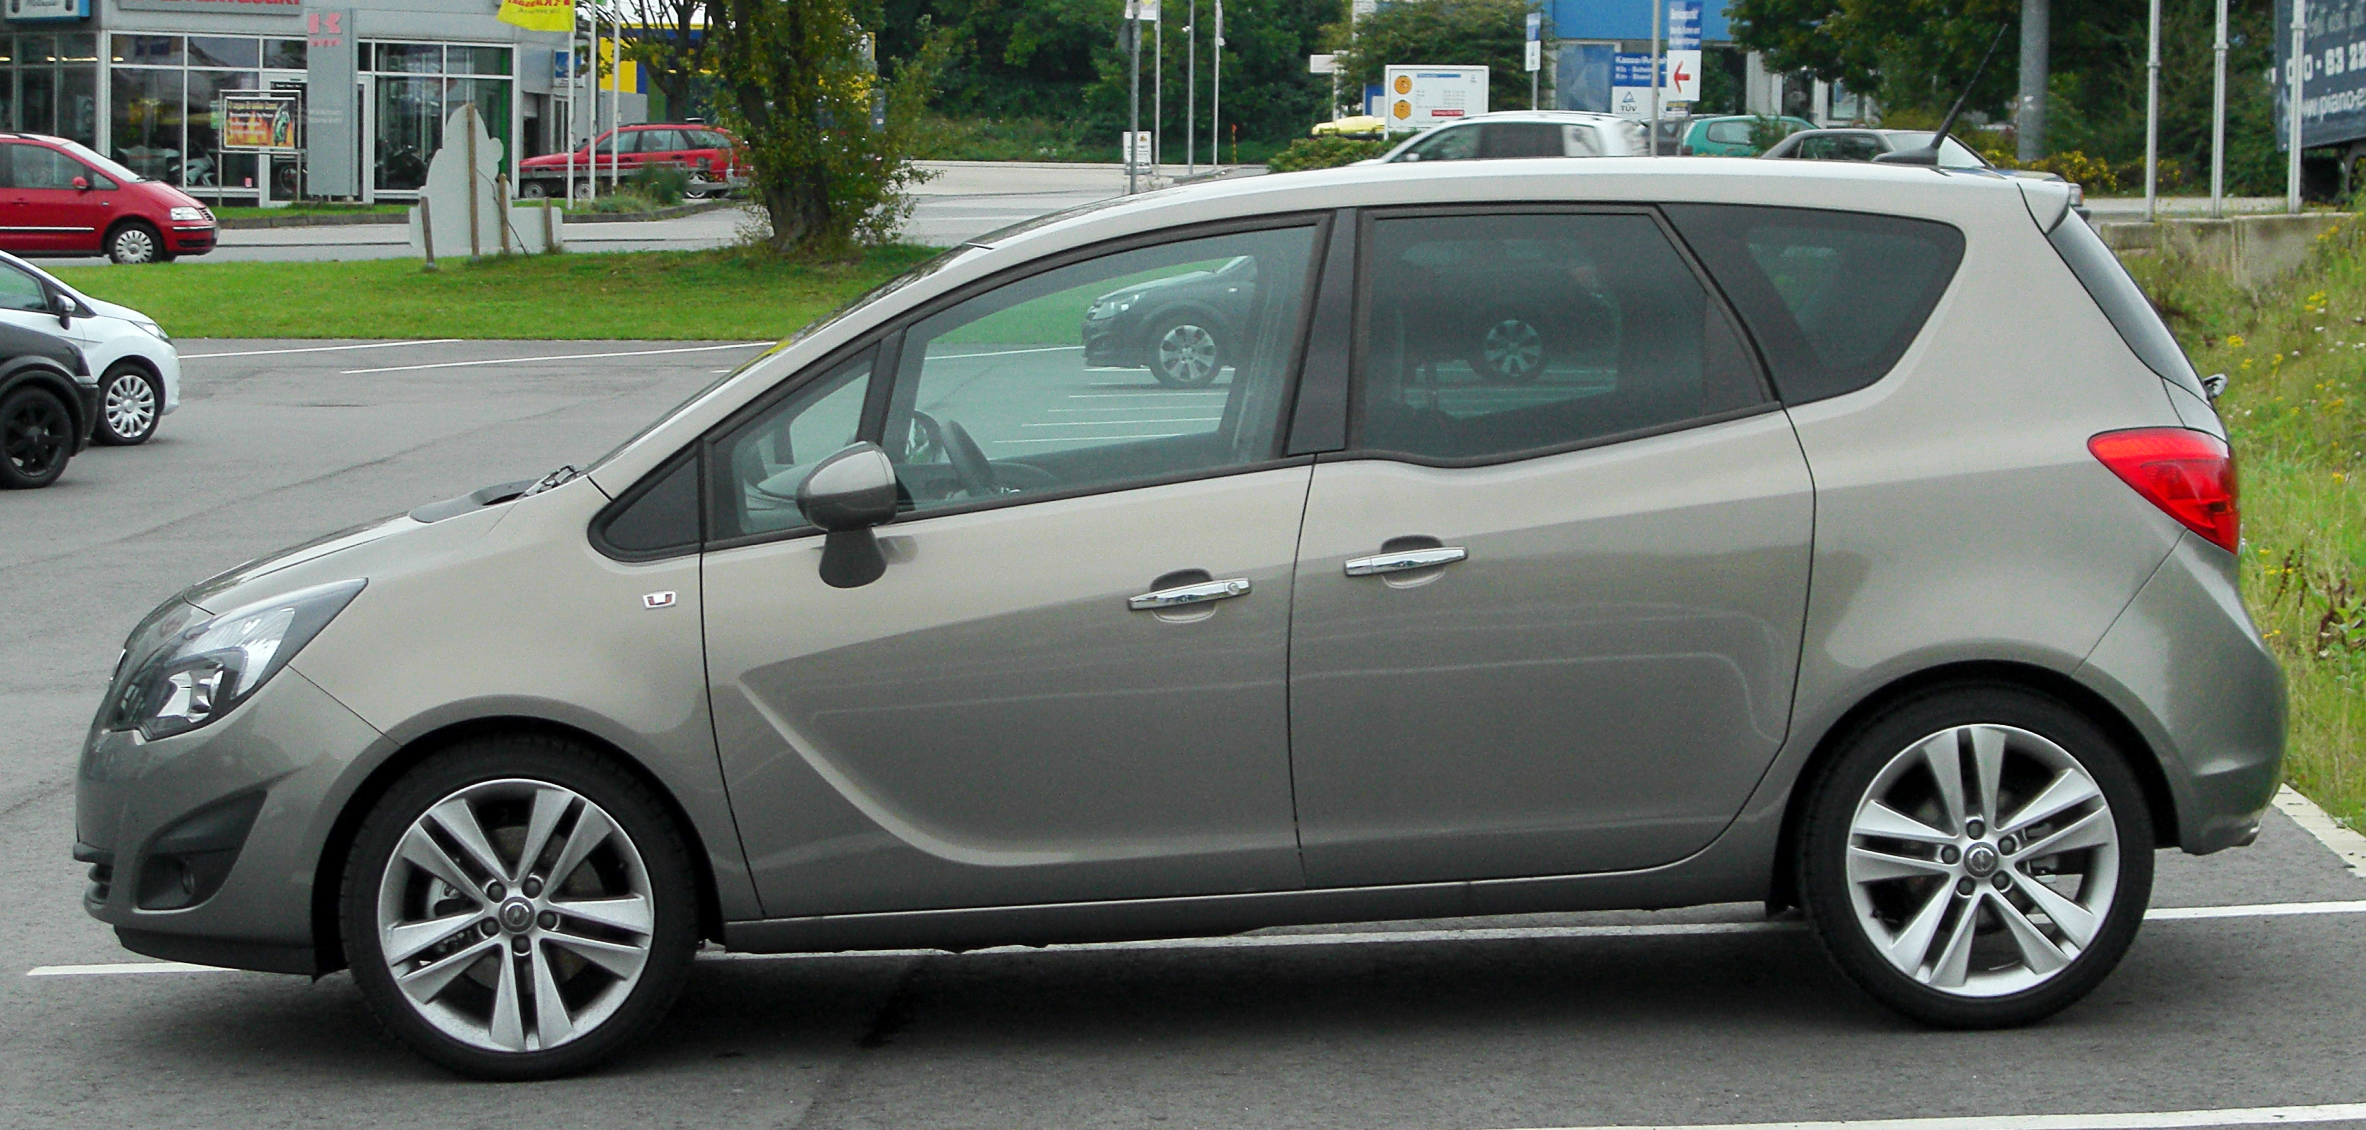 Opel Meriva - Wikipedia